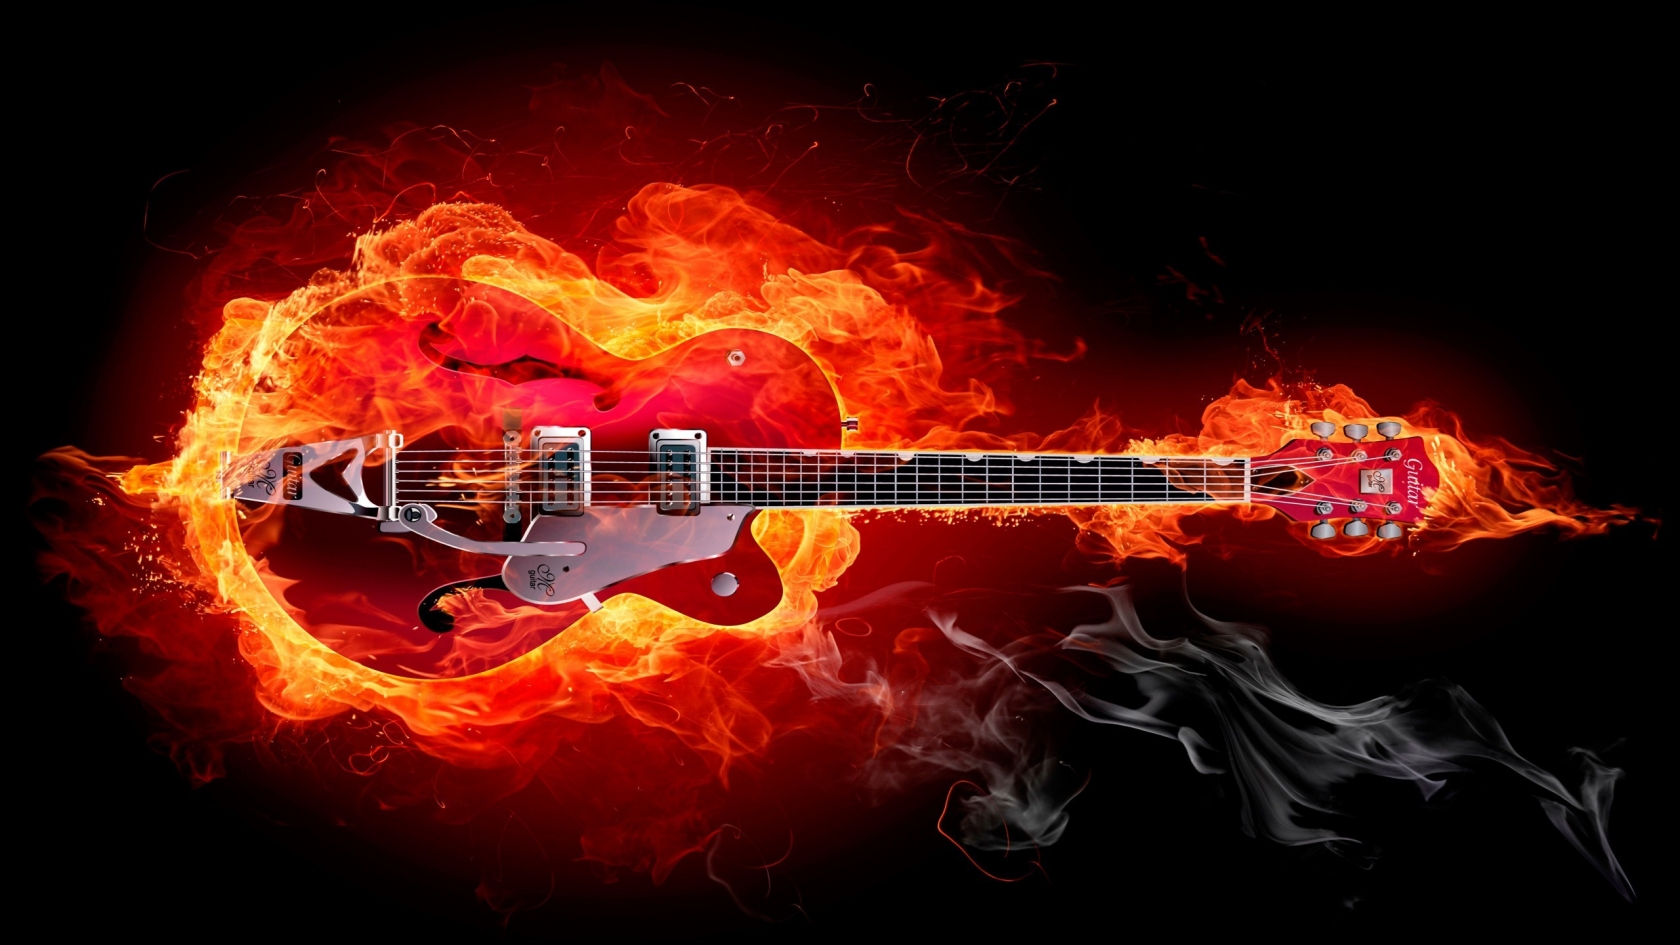 Fire Guitar for 1680 x 945 HDTV resolution